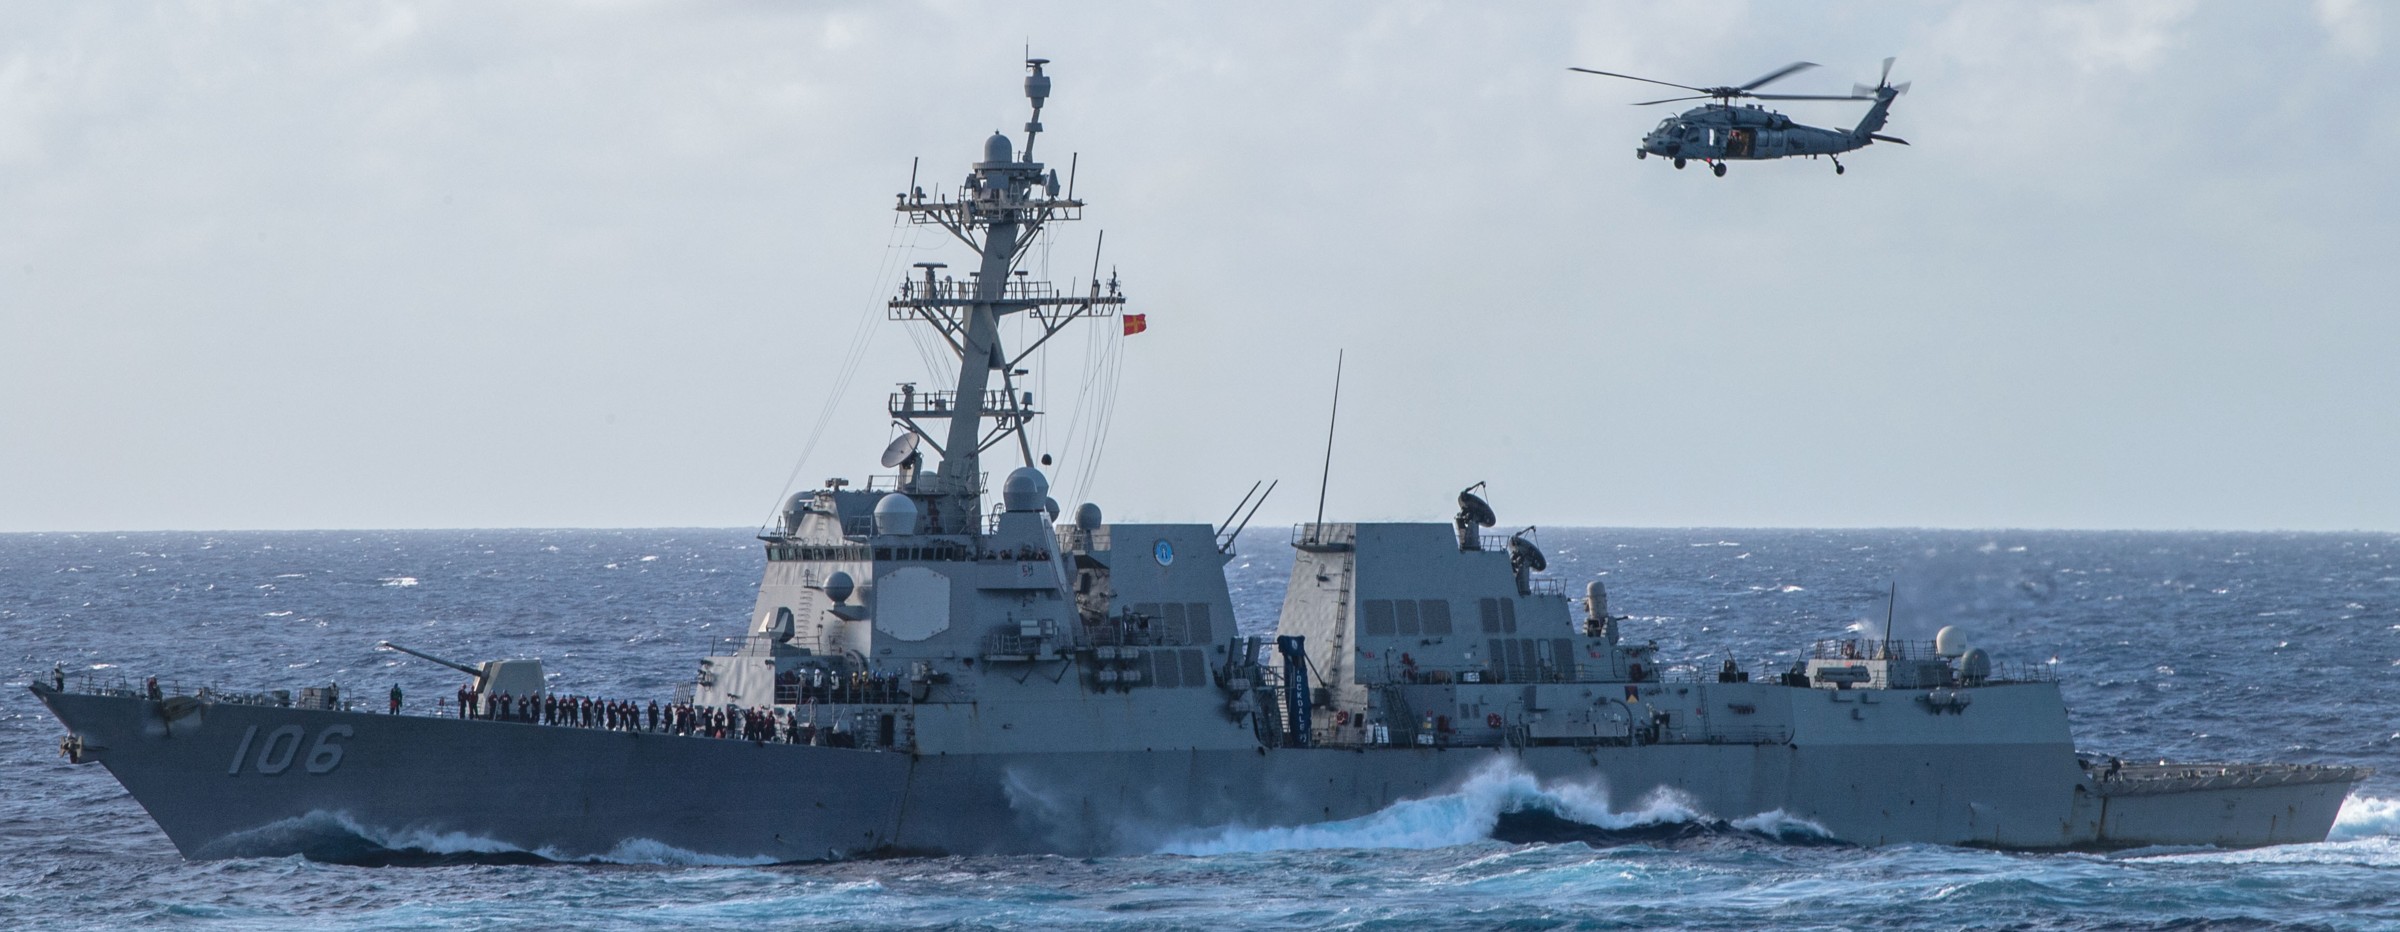 ddg-106 uss stockdale arleigh burke class guided missile destroyer aegis us navy philippine sea 149